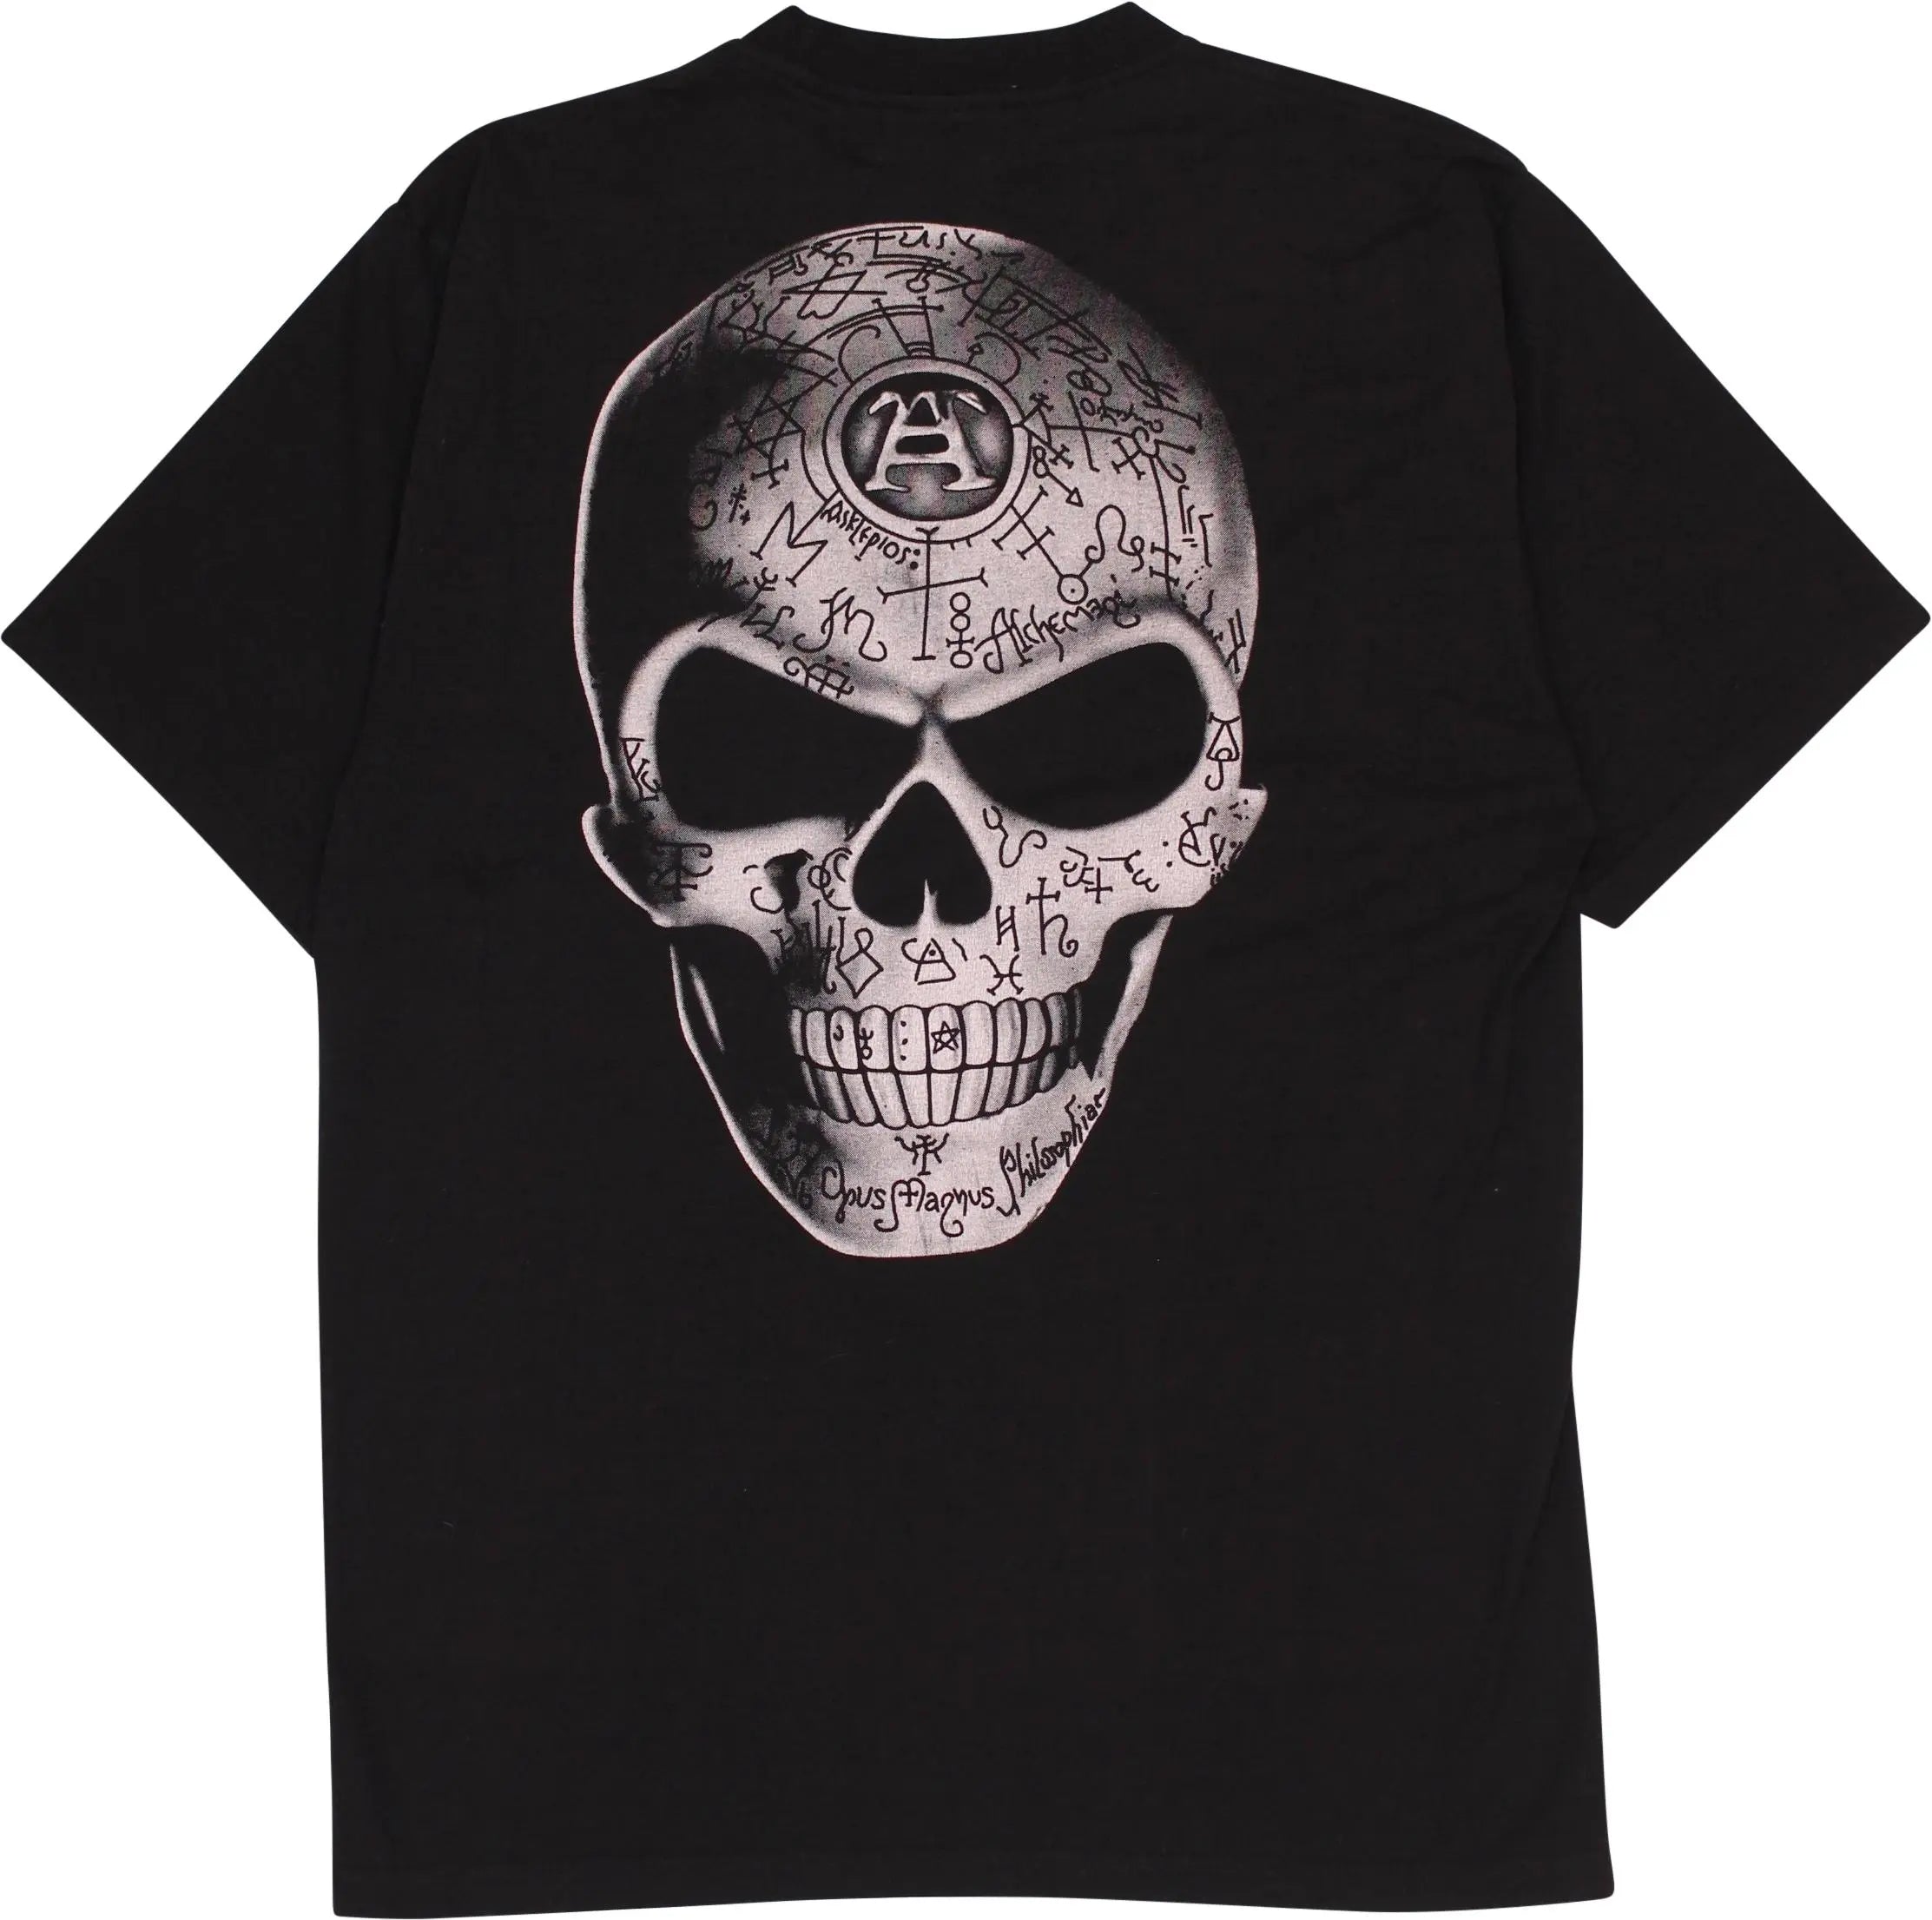 Spirit Sportswear - Skeleton T-Shirt- ThriftTale.com - Vintage and second handclothing